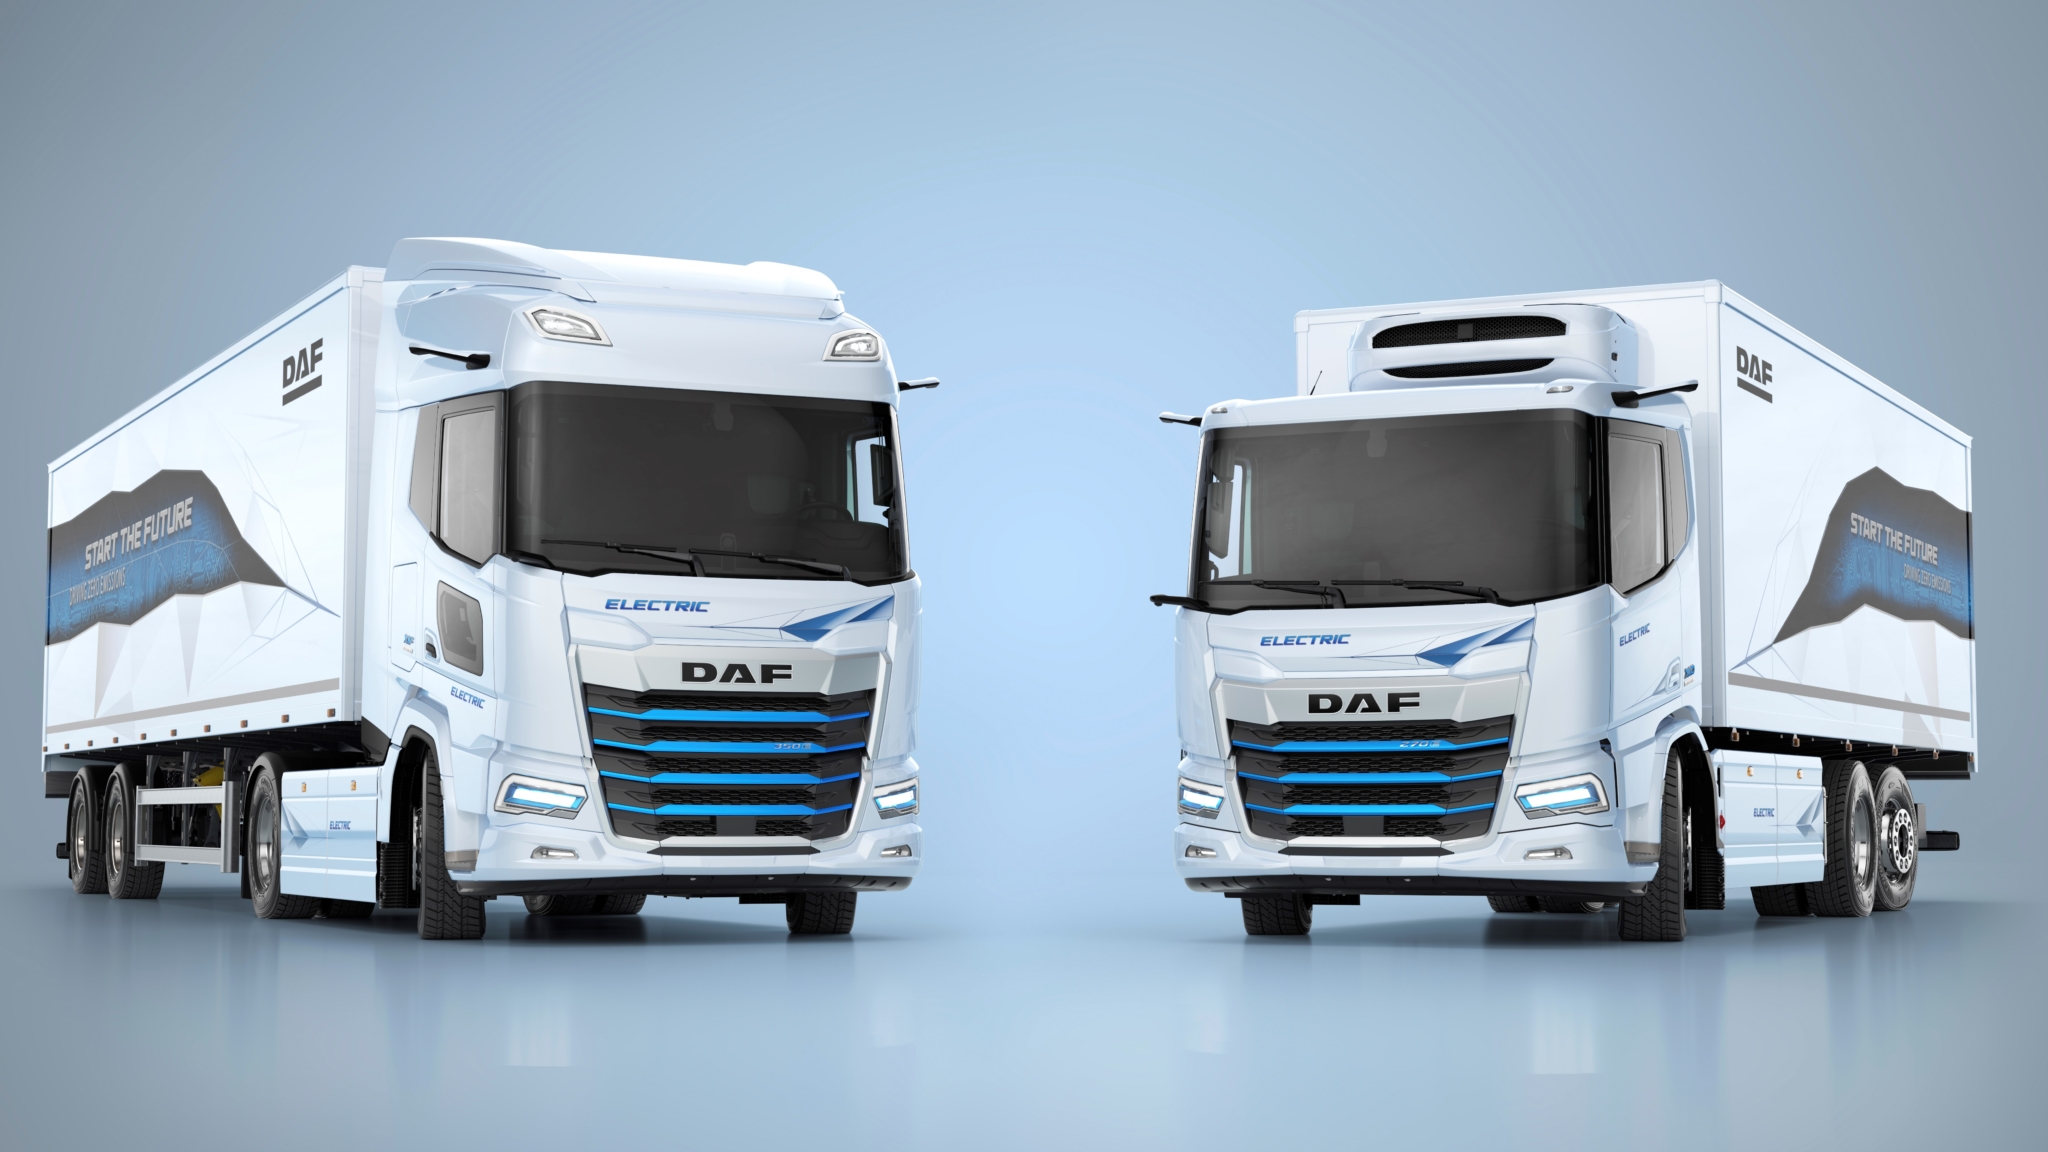 Watts Truck & Van DAF Dealership in Swansea, Cardiff & Newport